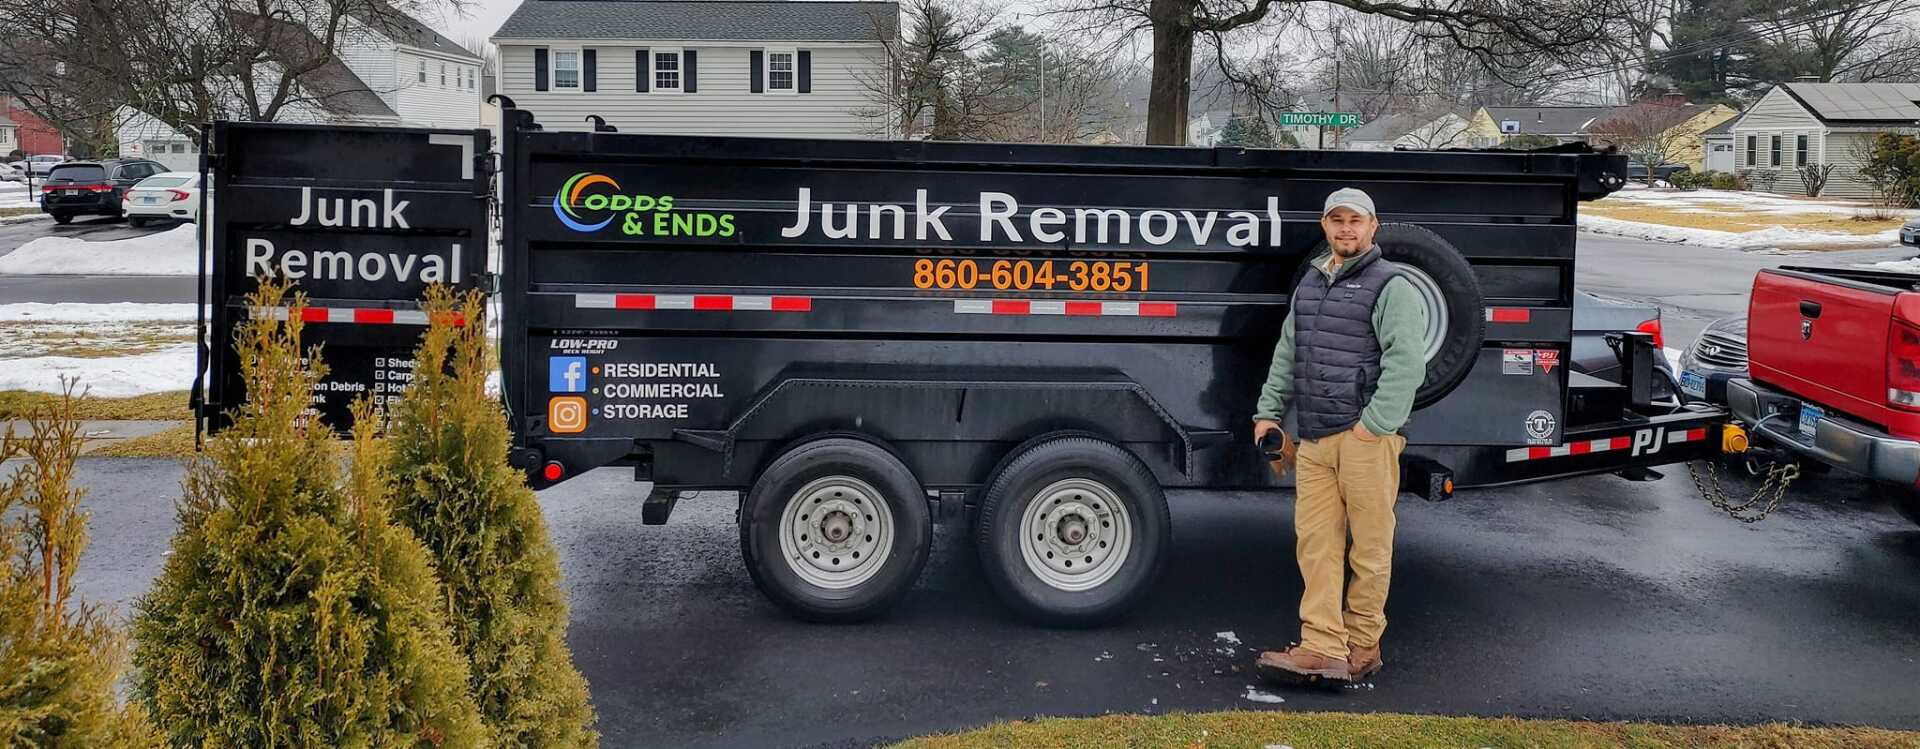 Junk Removal Trailer